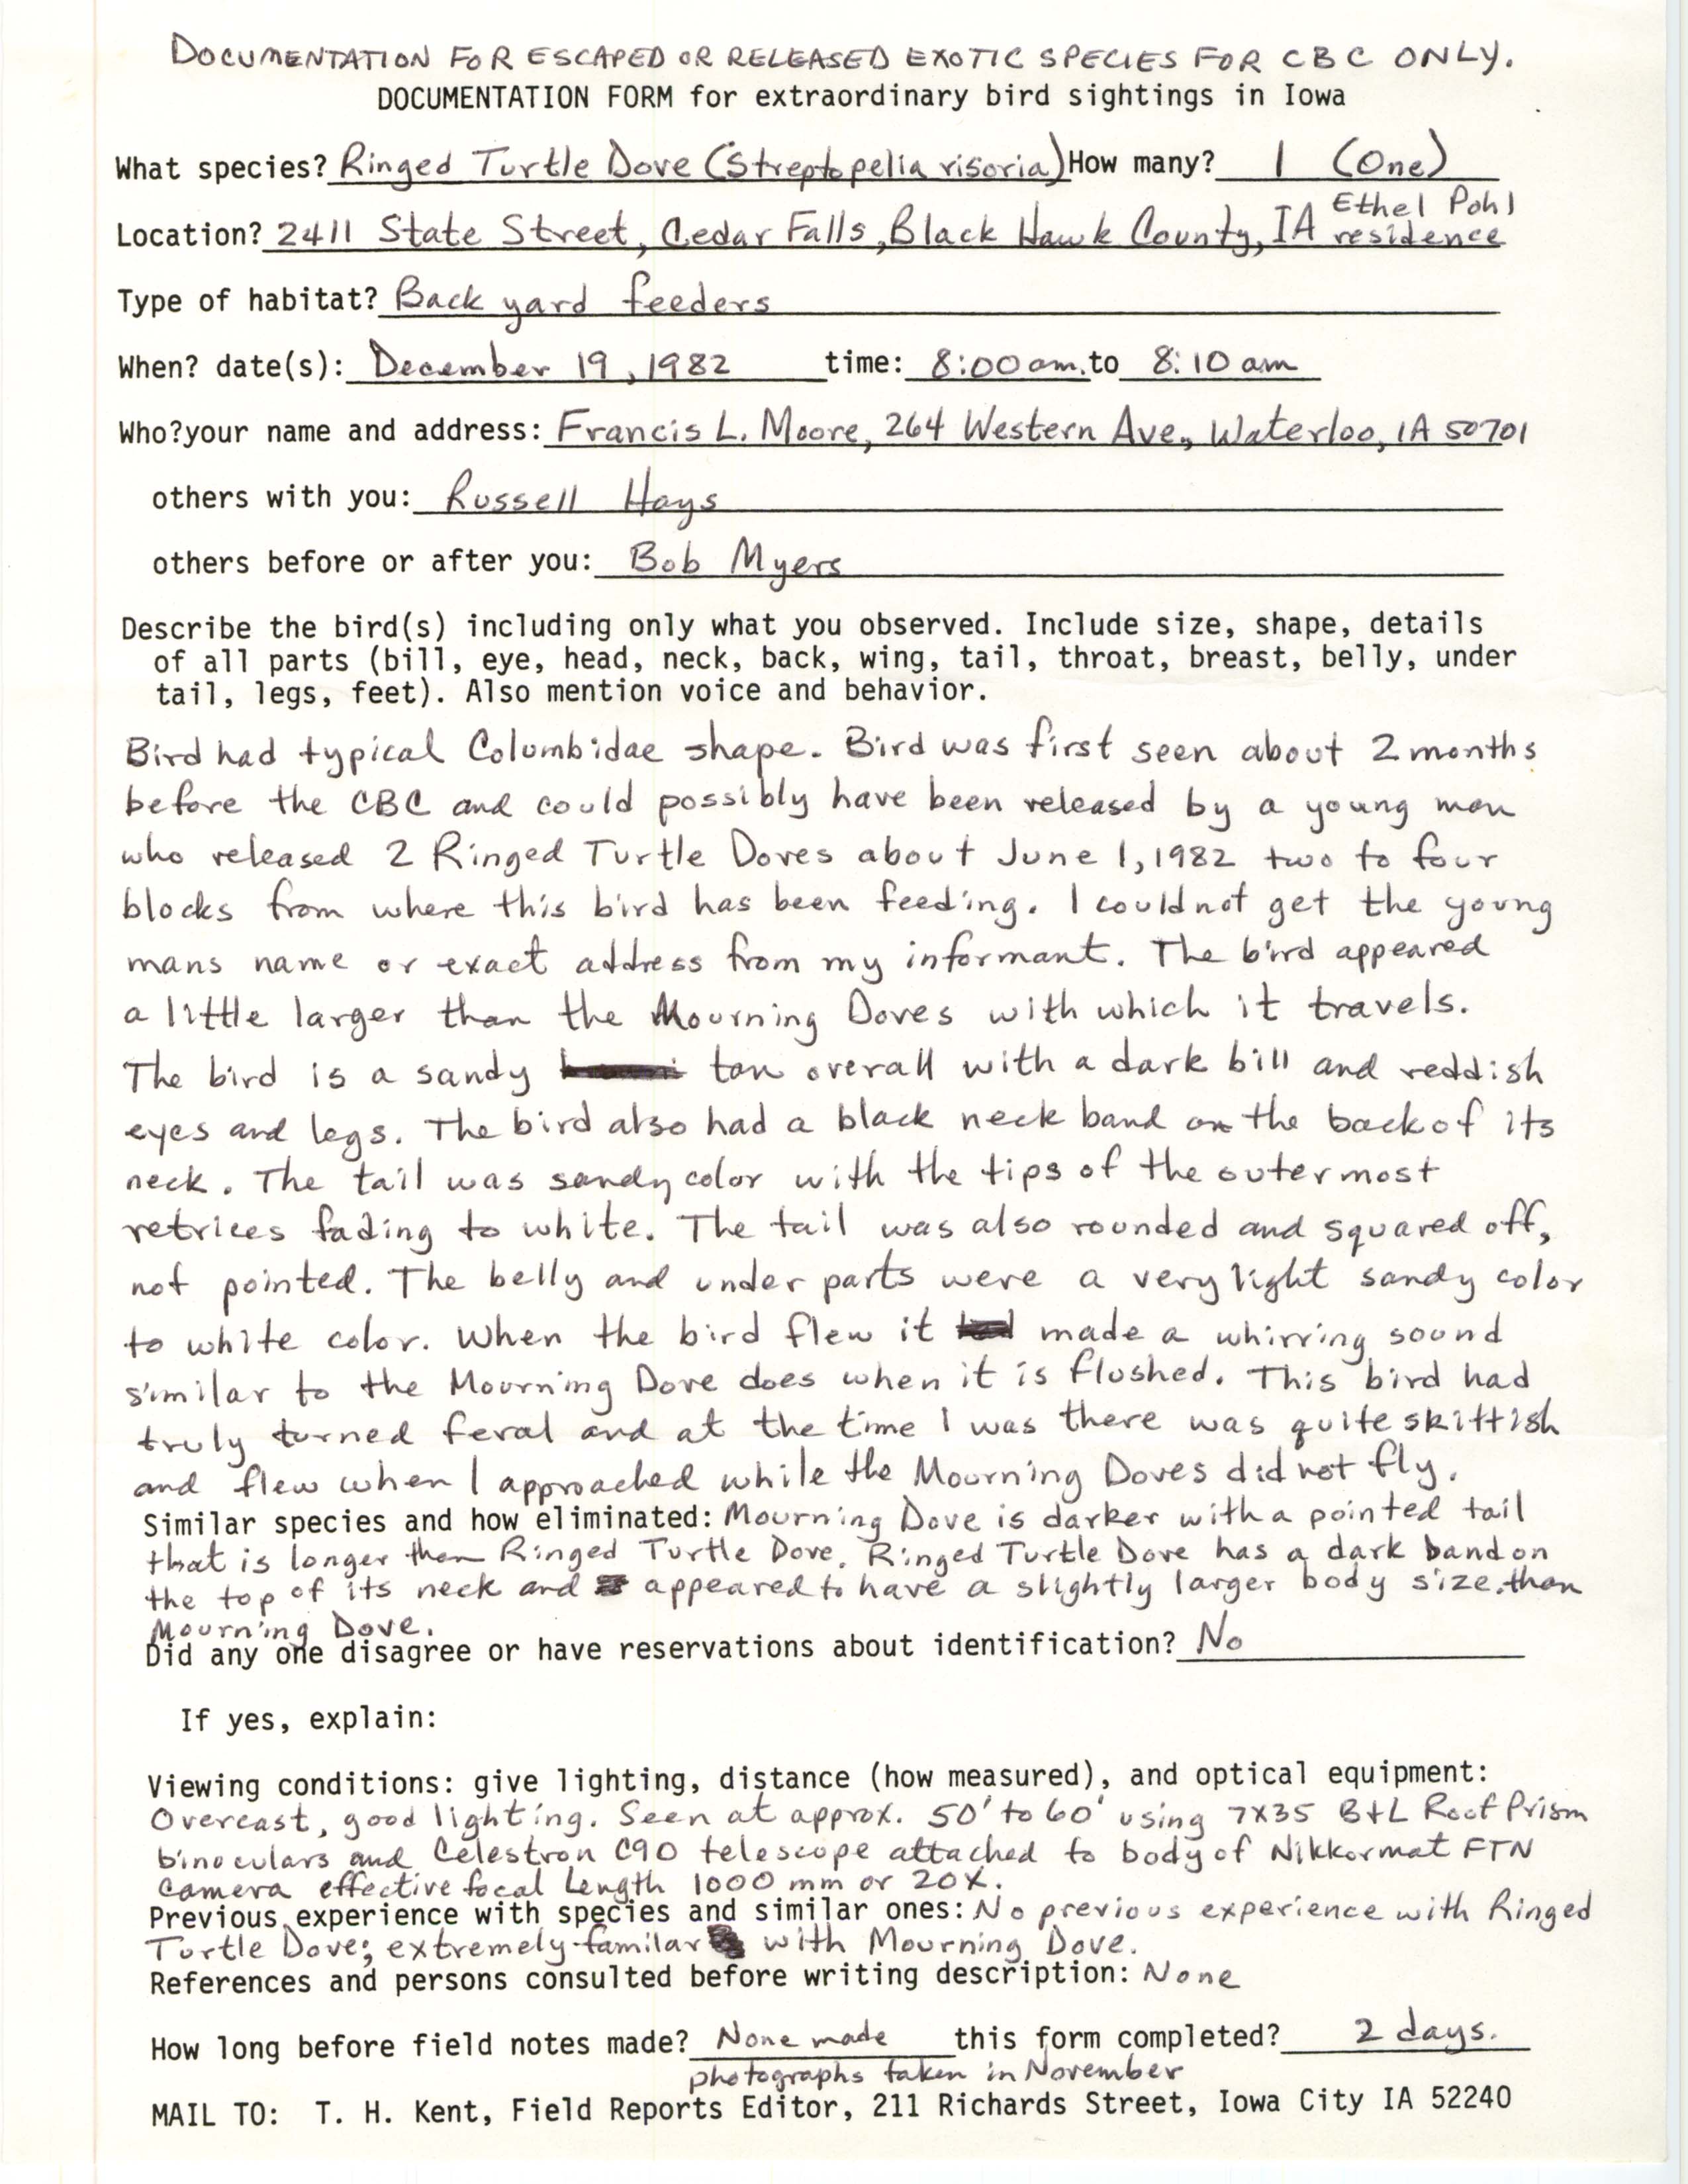 Rare bird documentation form for Ringed Turtle Dove at Cedar Falls, 1982